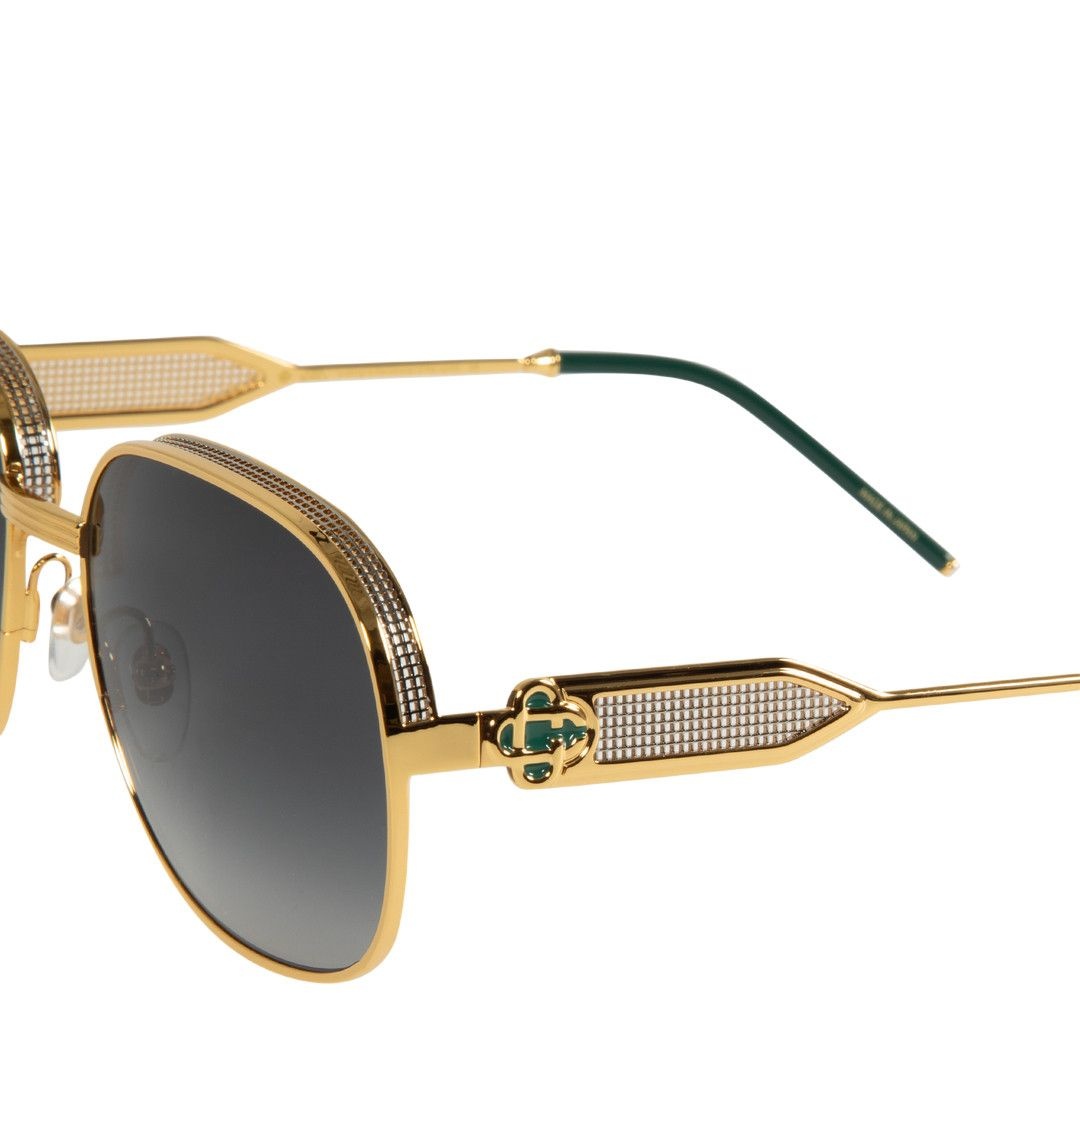 Casablanca Sunglasses 'Yellow Gold/Silver/Black' - 3